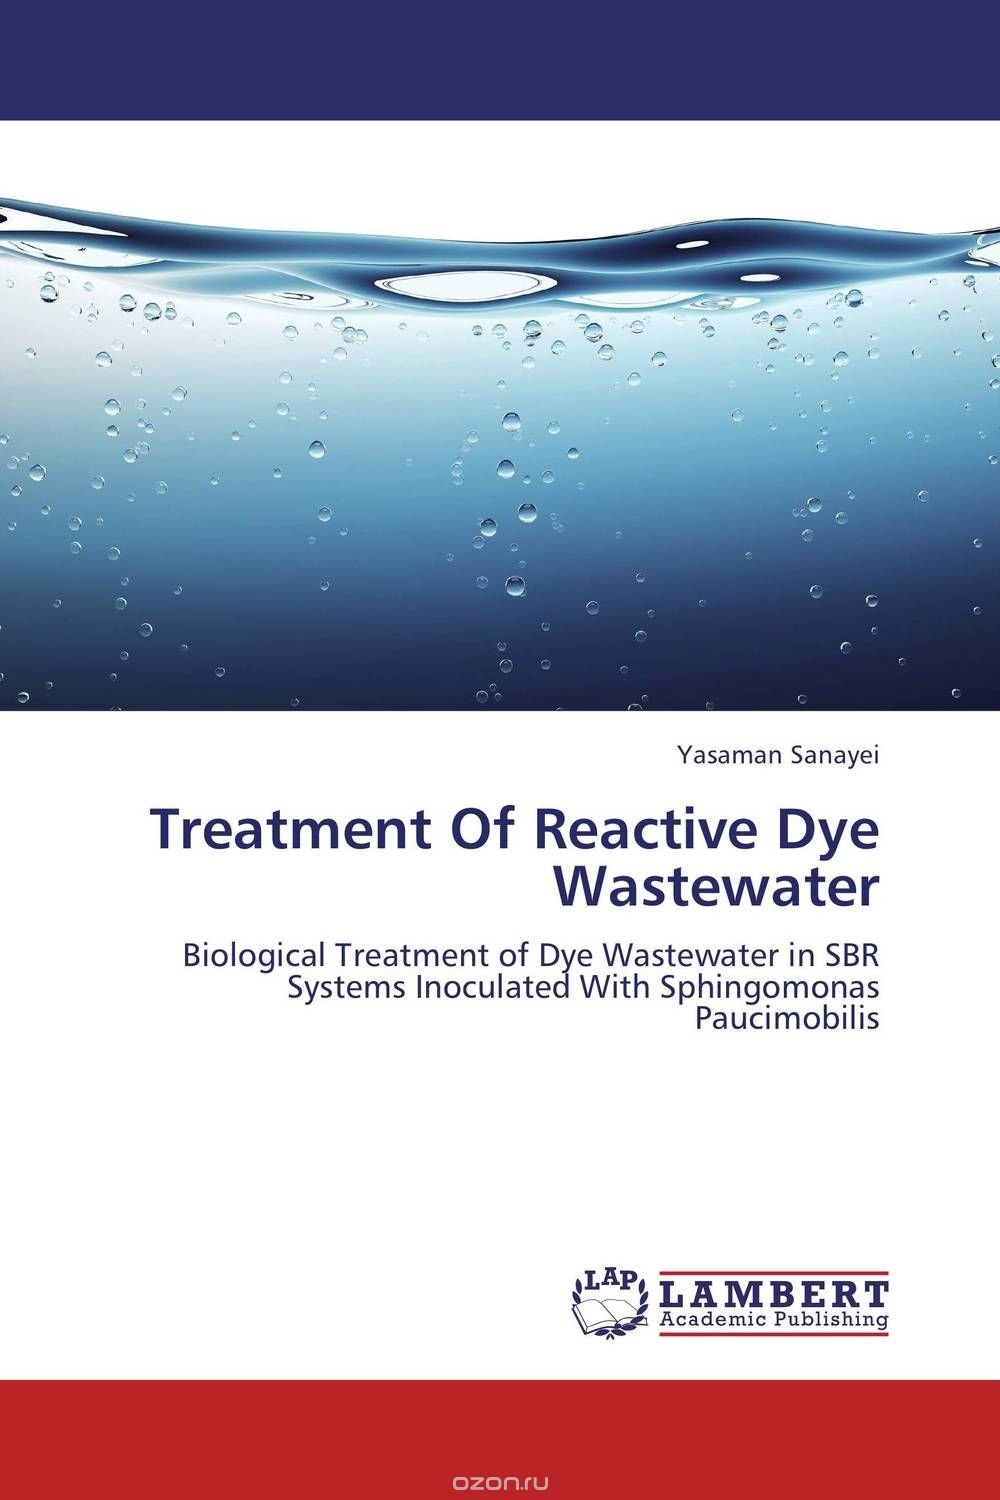 Скачать книгу "Treatment Of Reactive Dye Wastewater"